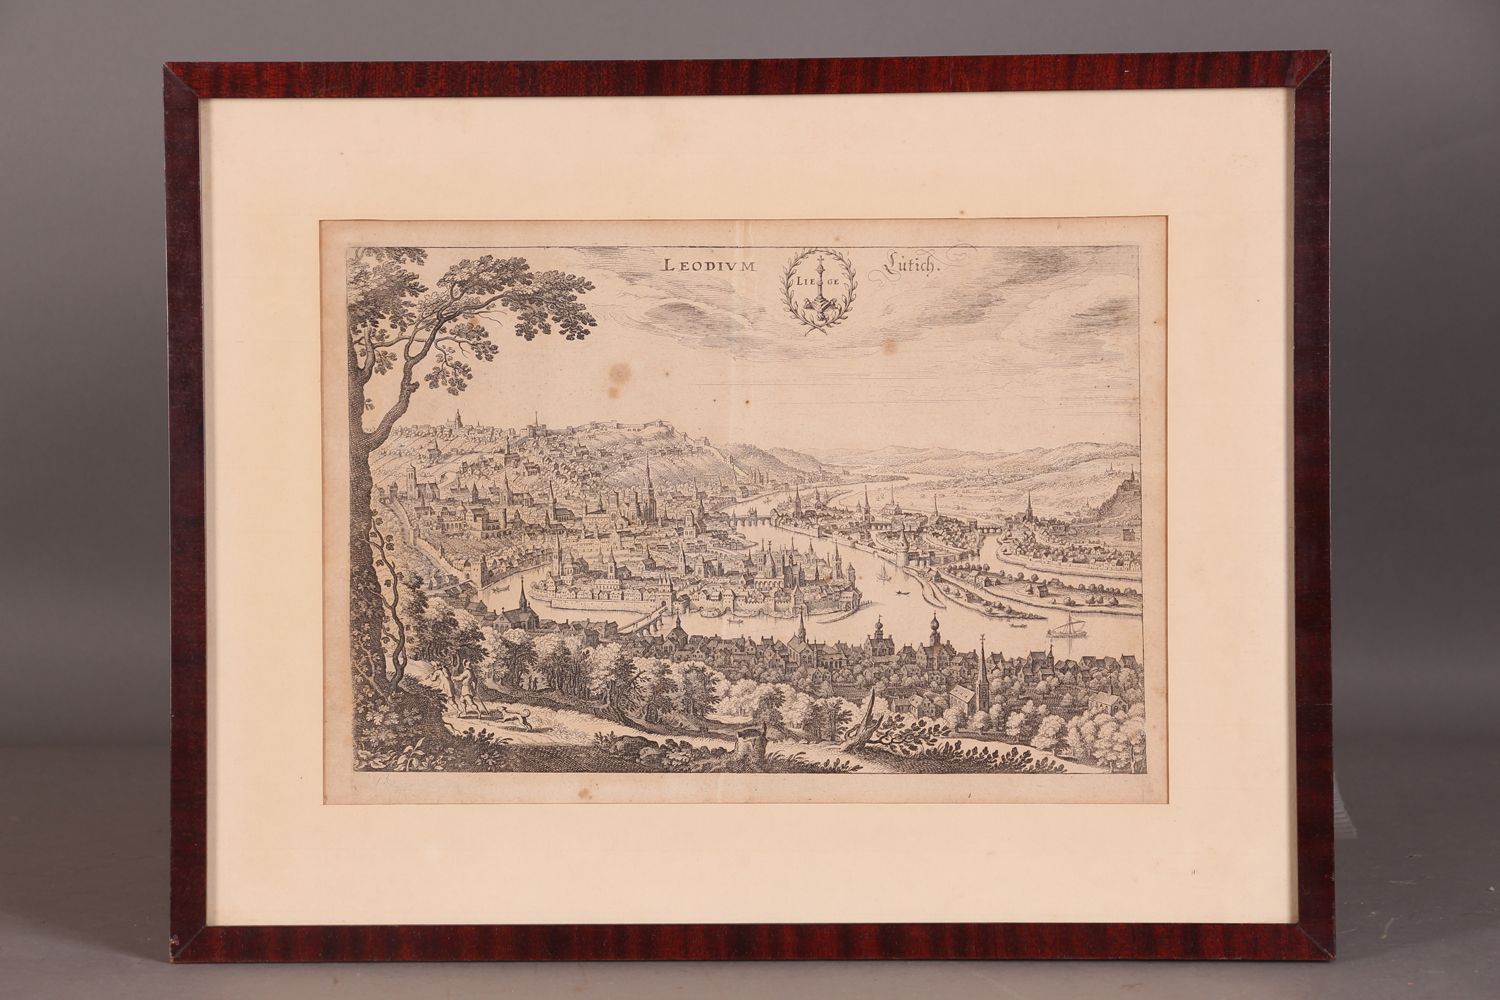 [LIEGE]. Mathieu MERIAN. "Leodium, Liège, Lütich. 1647" Grabado, 22 x 33,5. De "&hellip;